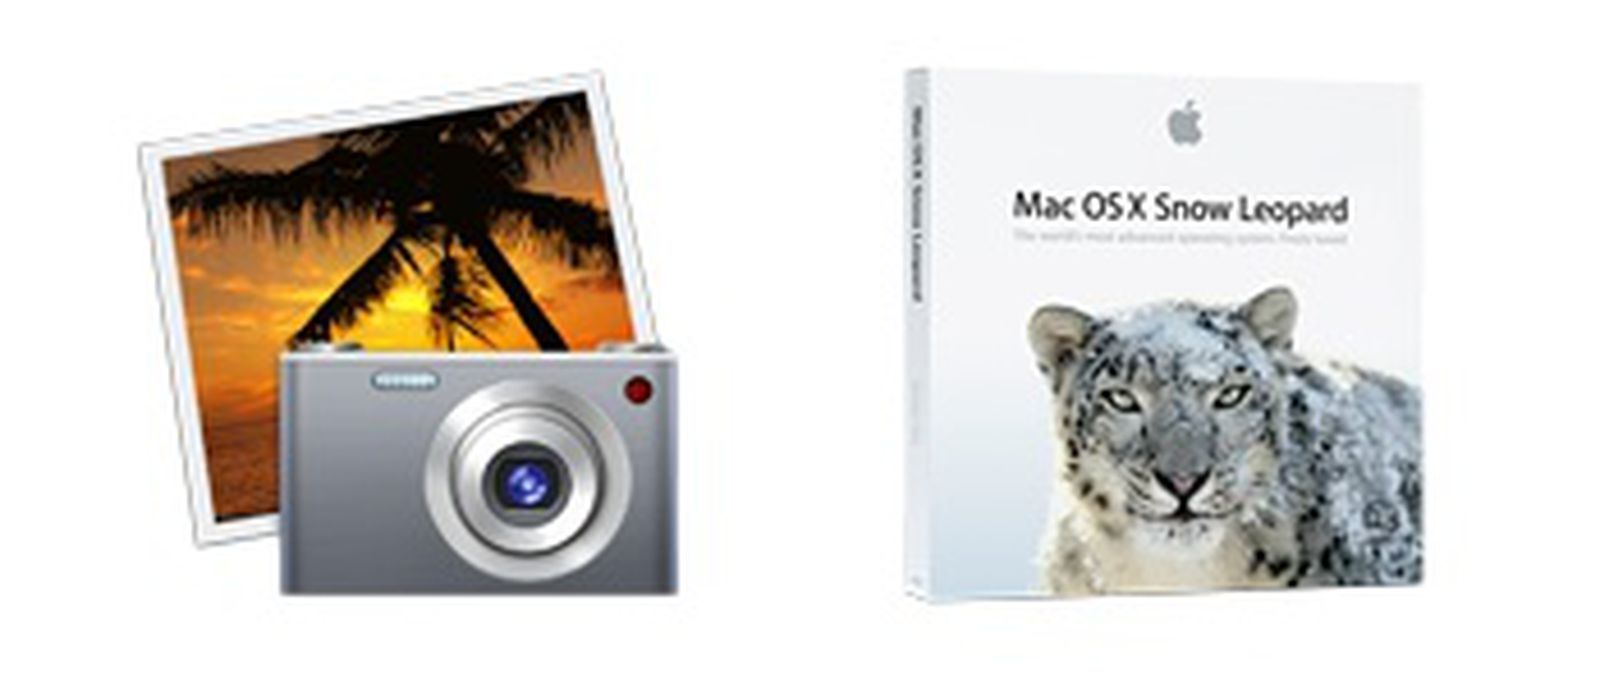 Free Iphoto Download Mac Os X 10.5 8